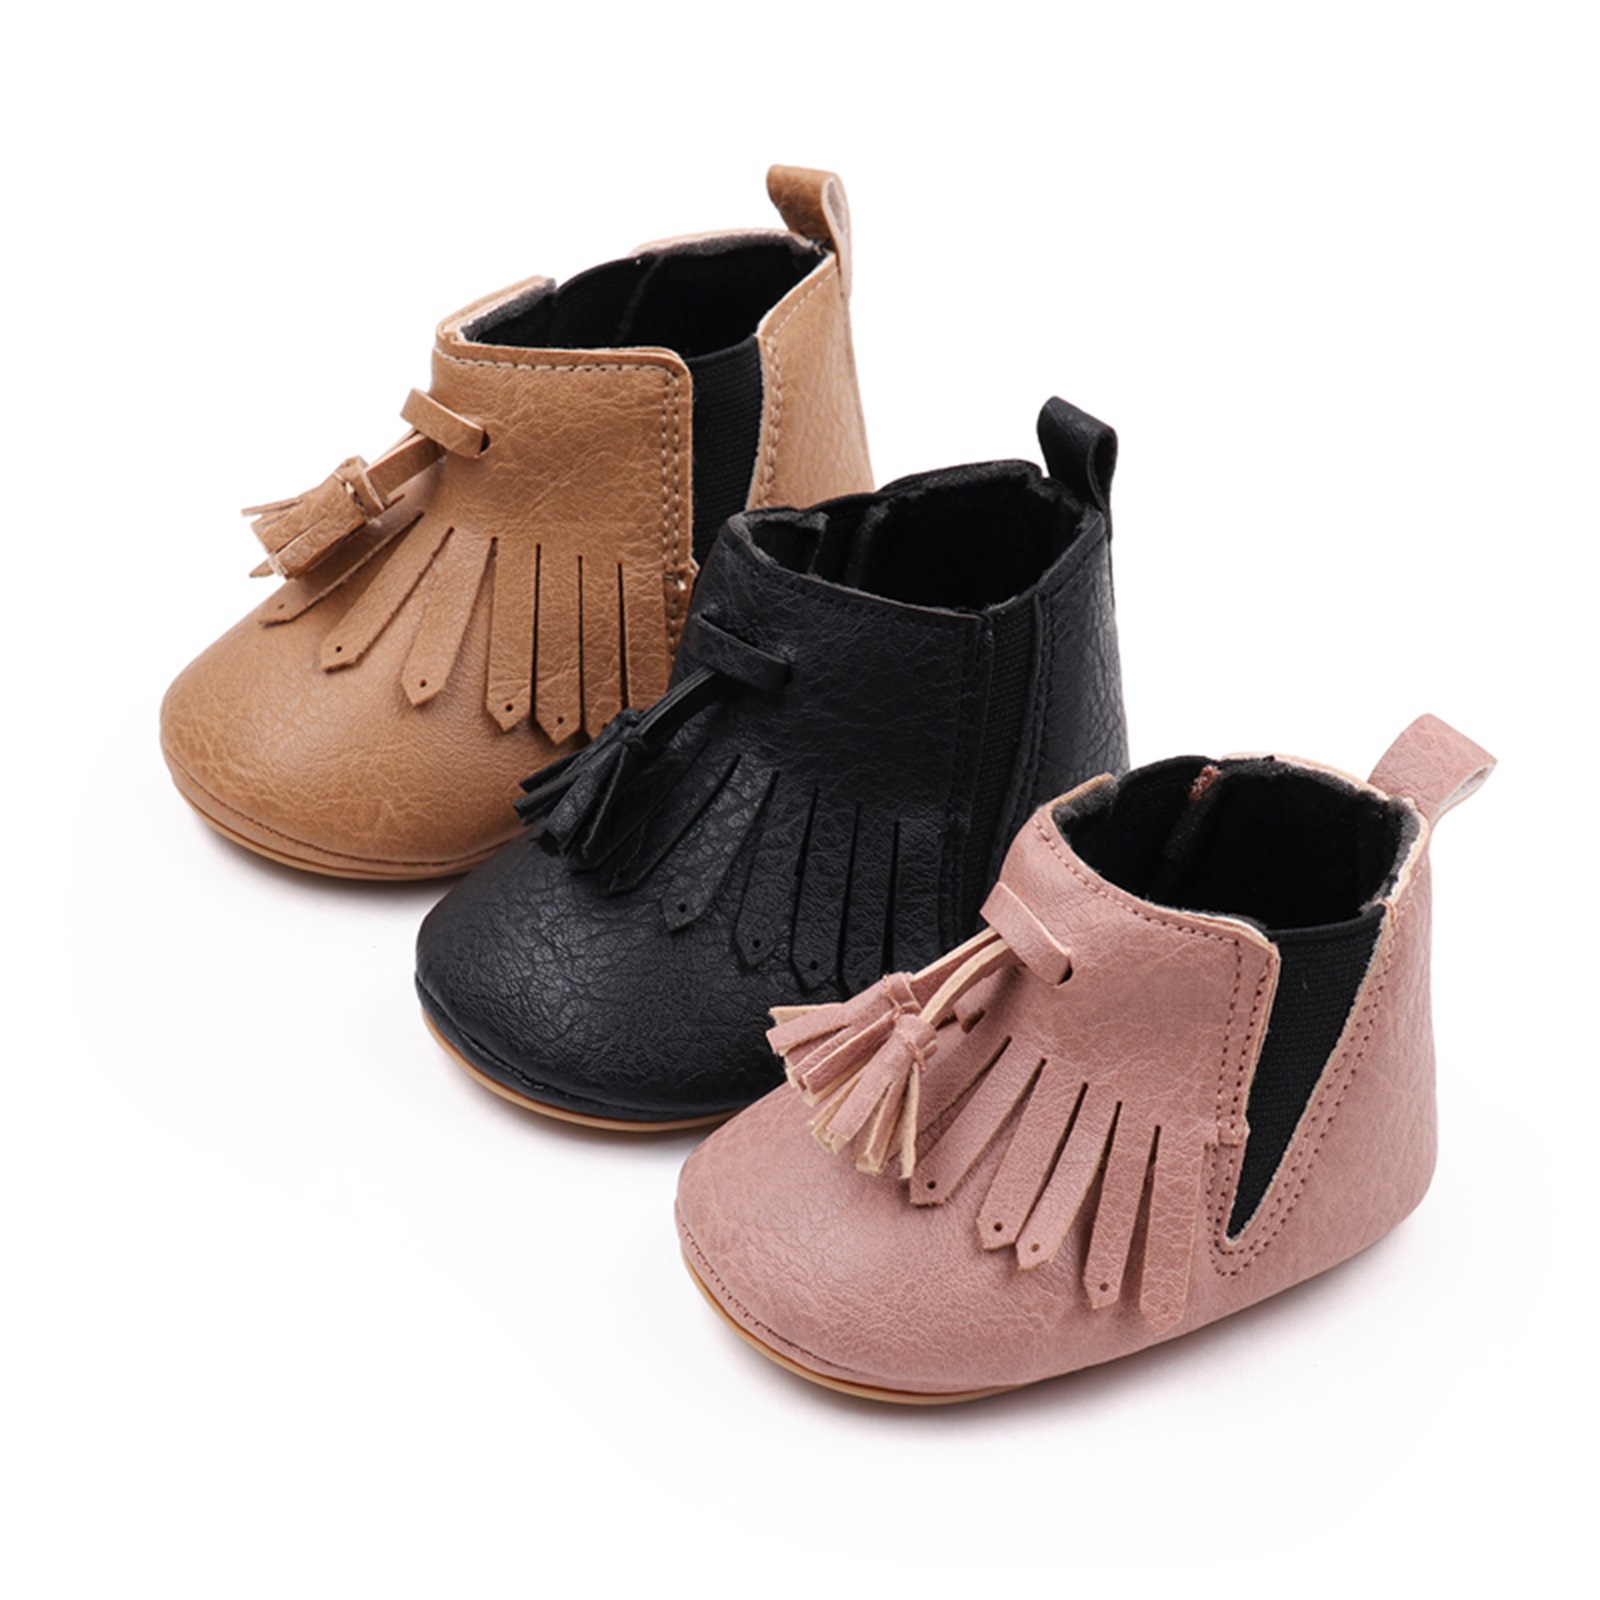 Newborn Girl Ankle Boots Fashion Tassels PU Winter Boots Warm Baby Walking